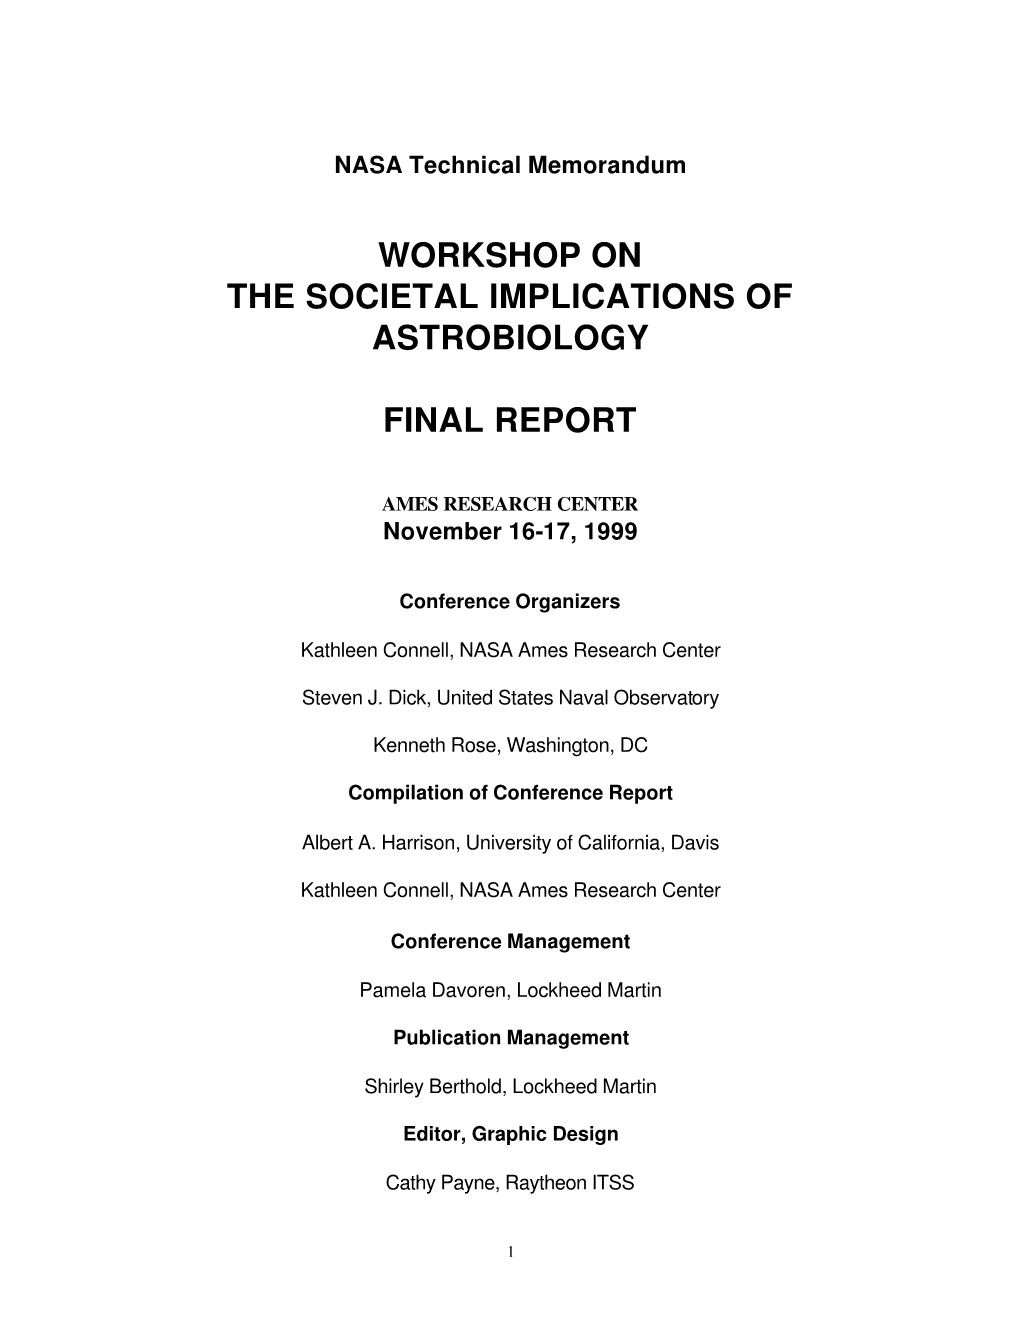 Workshop on the Societal Implications of Astrobiology